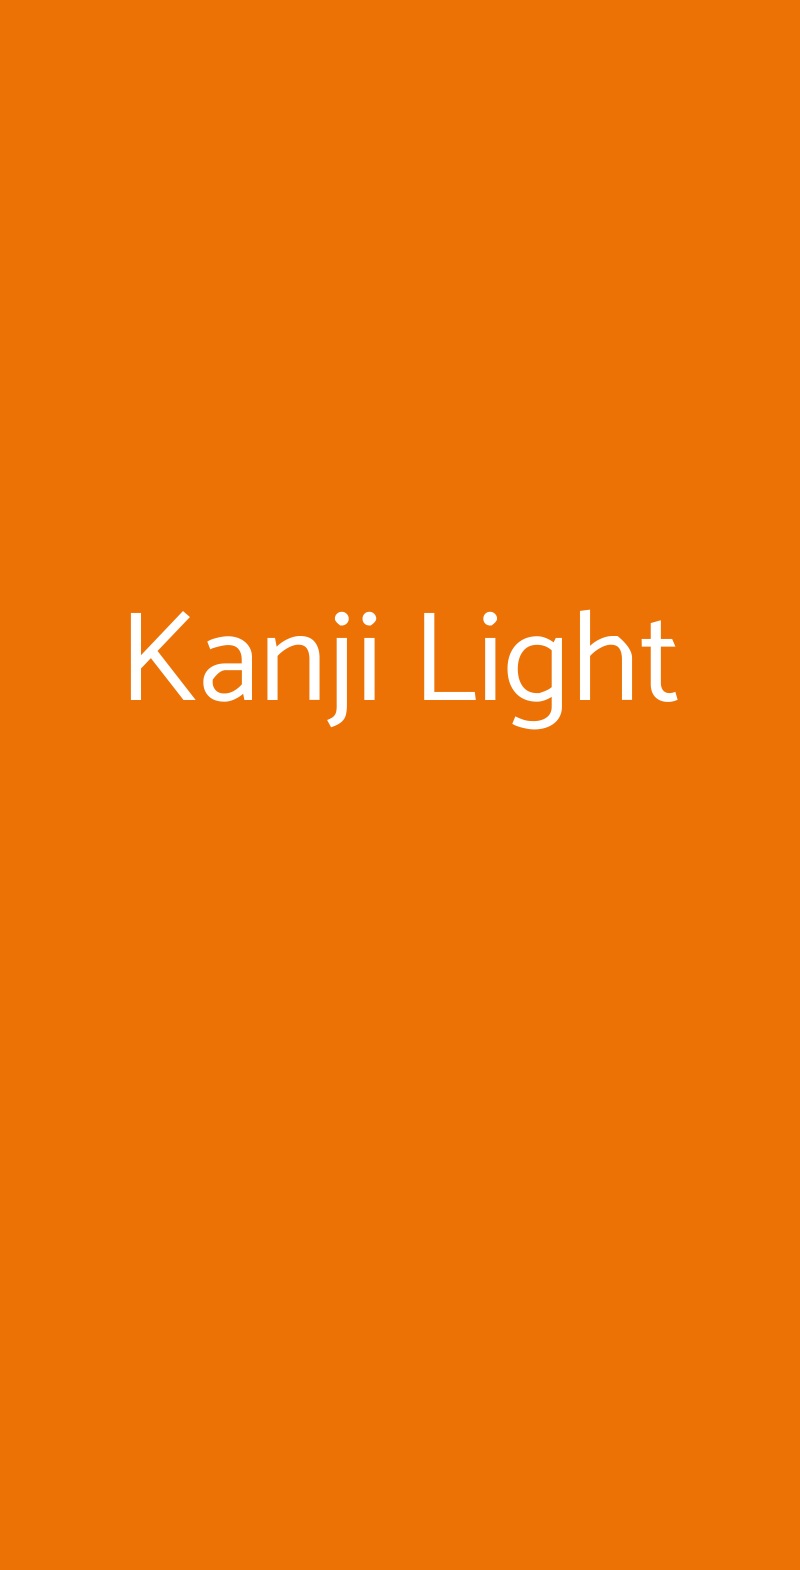 Kanji Light Milano menù 1 pagina